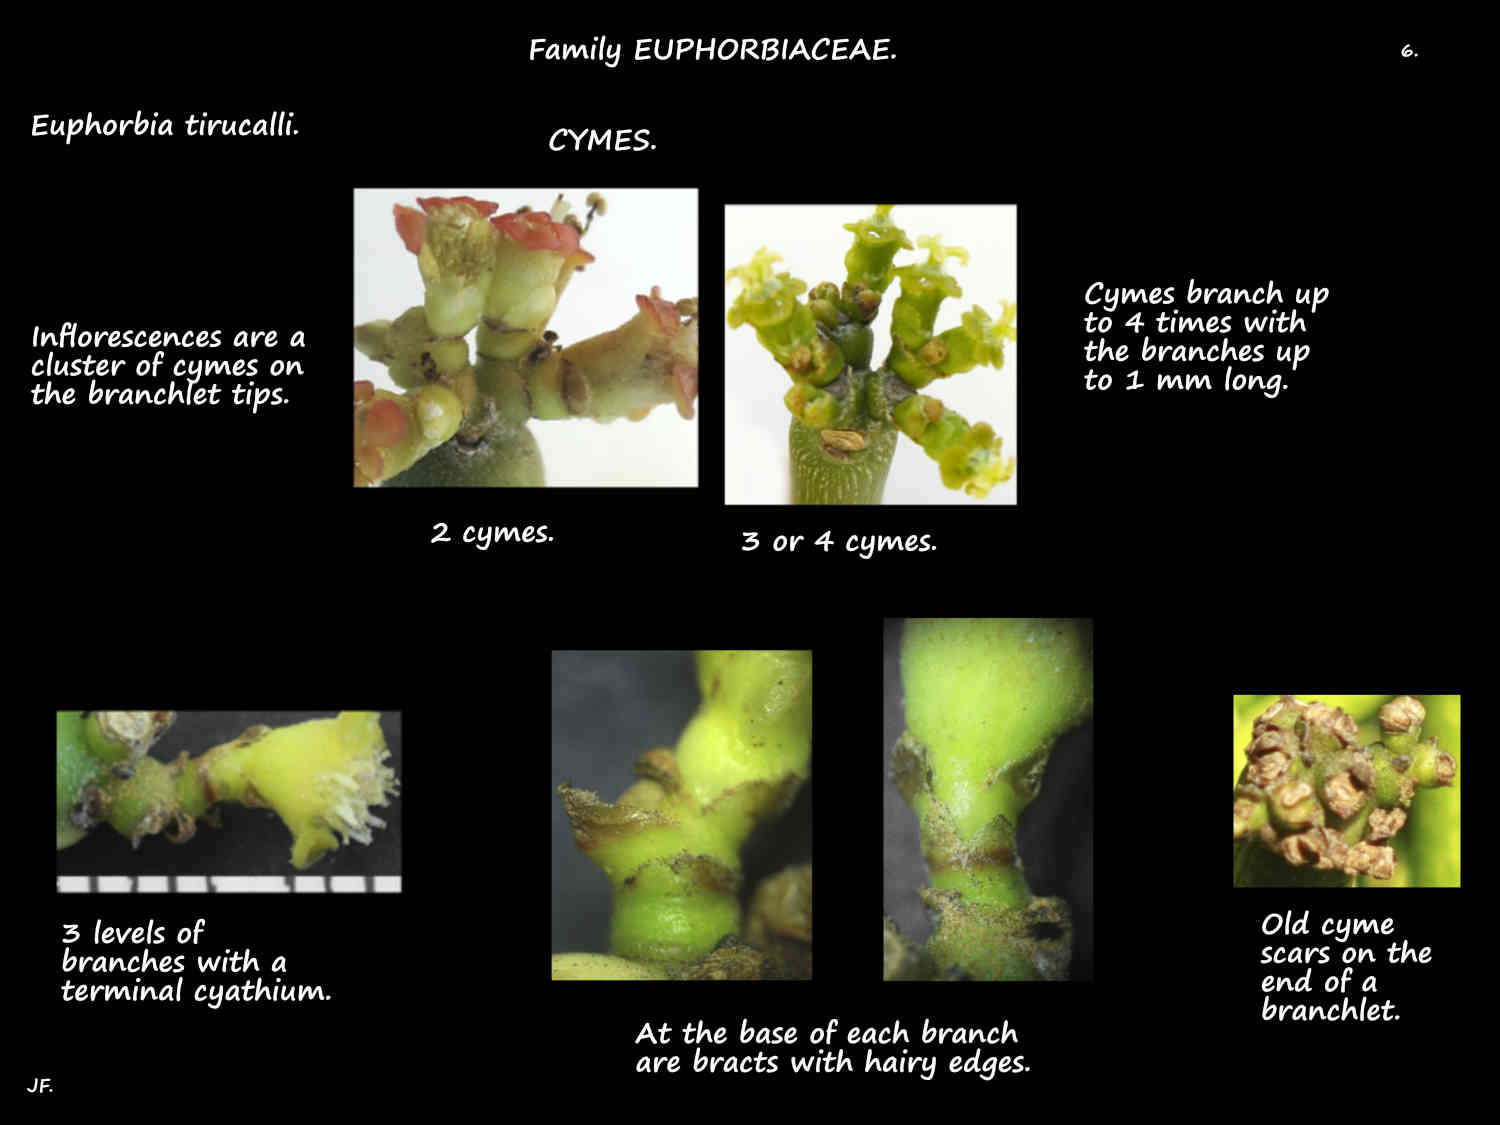 6 Euphorbia tirucalli cymes